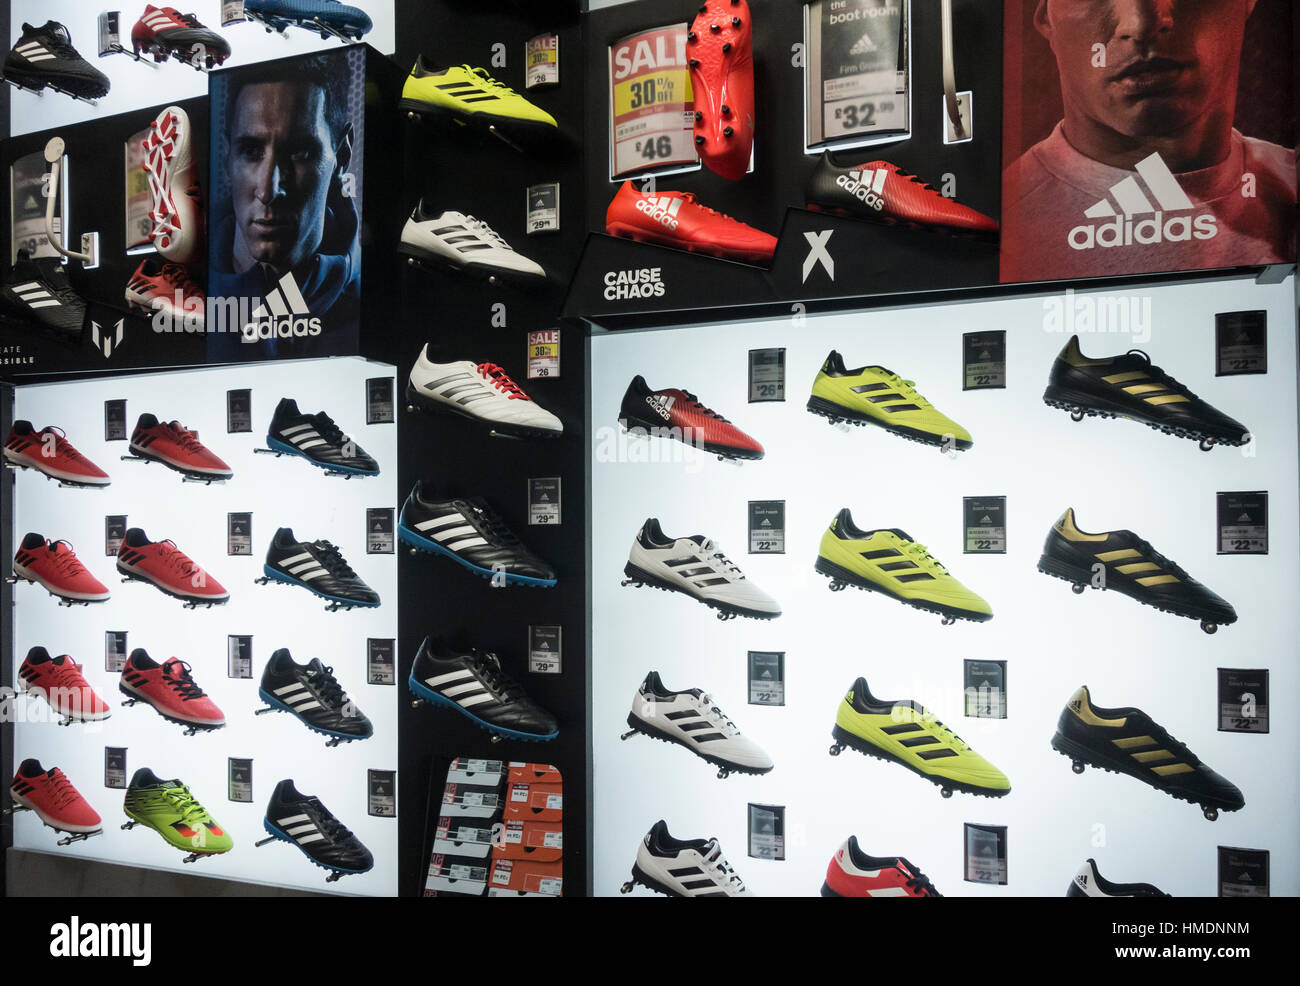 adidas shop football